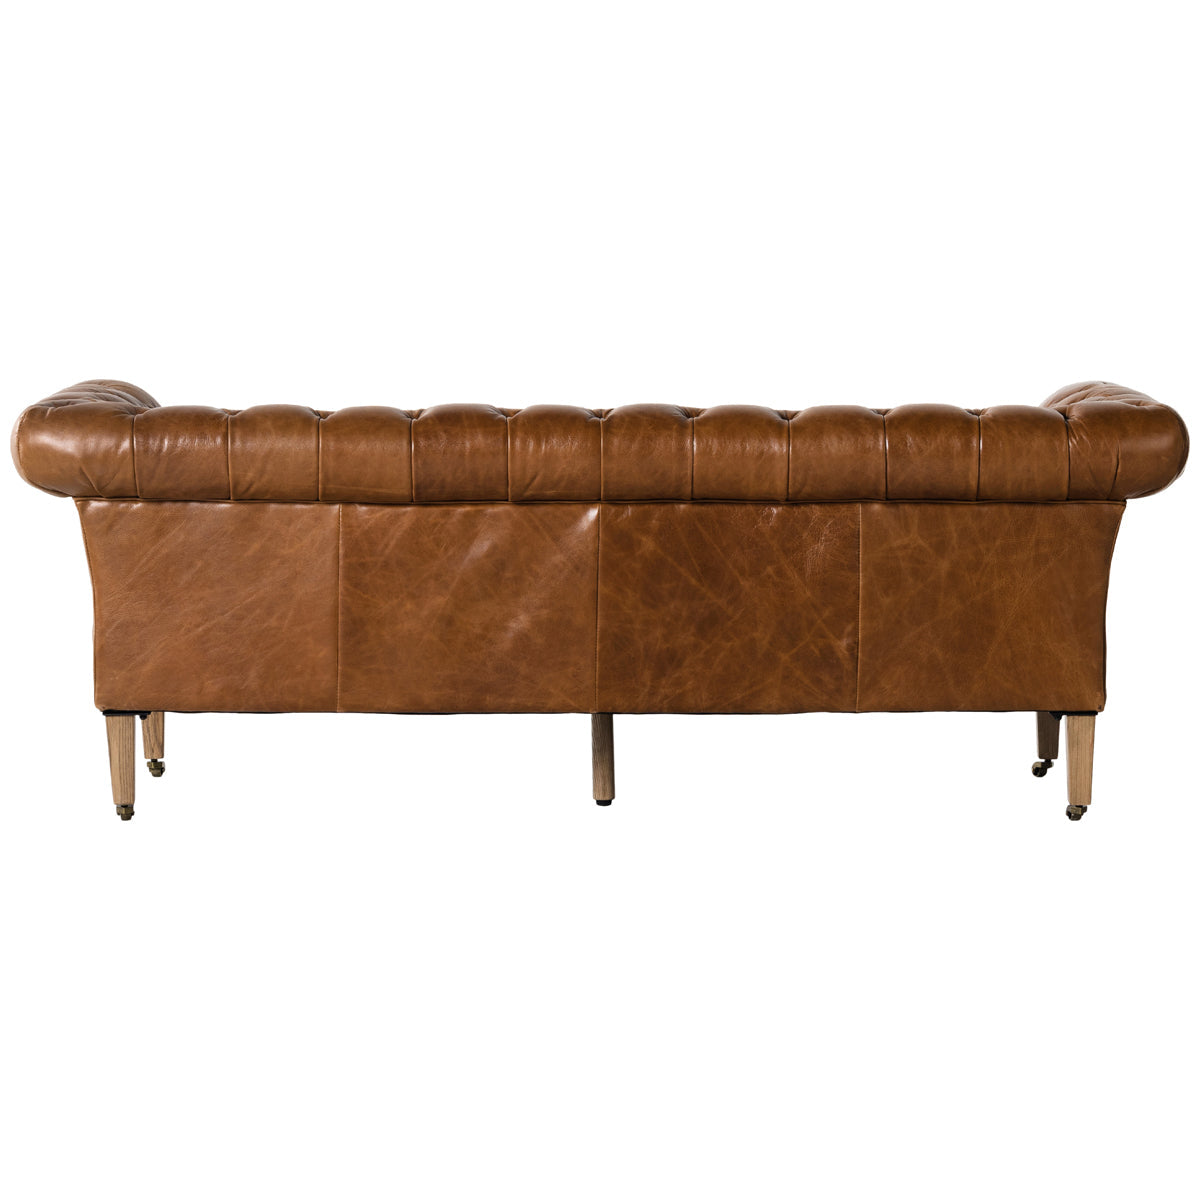 Four Hands Carnegie Briscoe Leather Sofa - Vintage Soft Camel